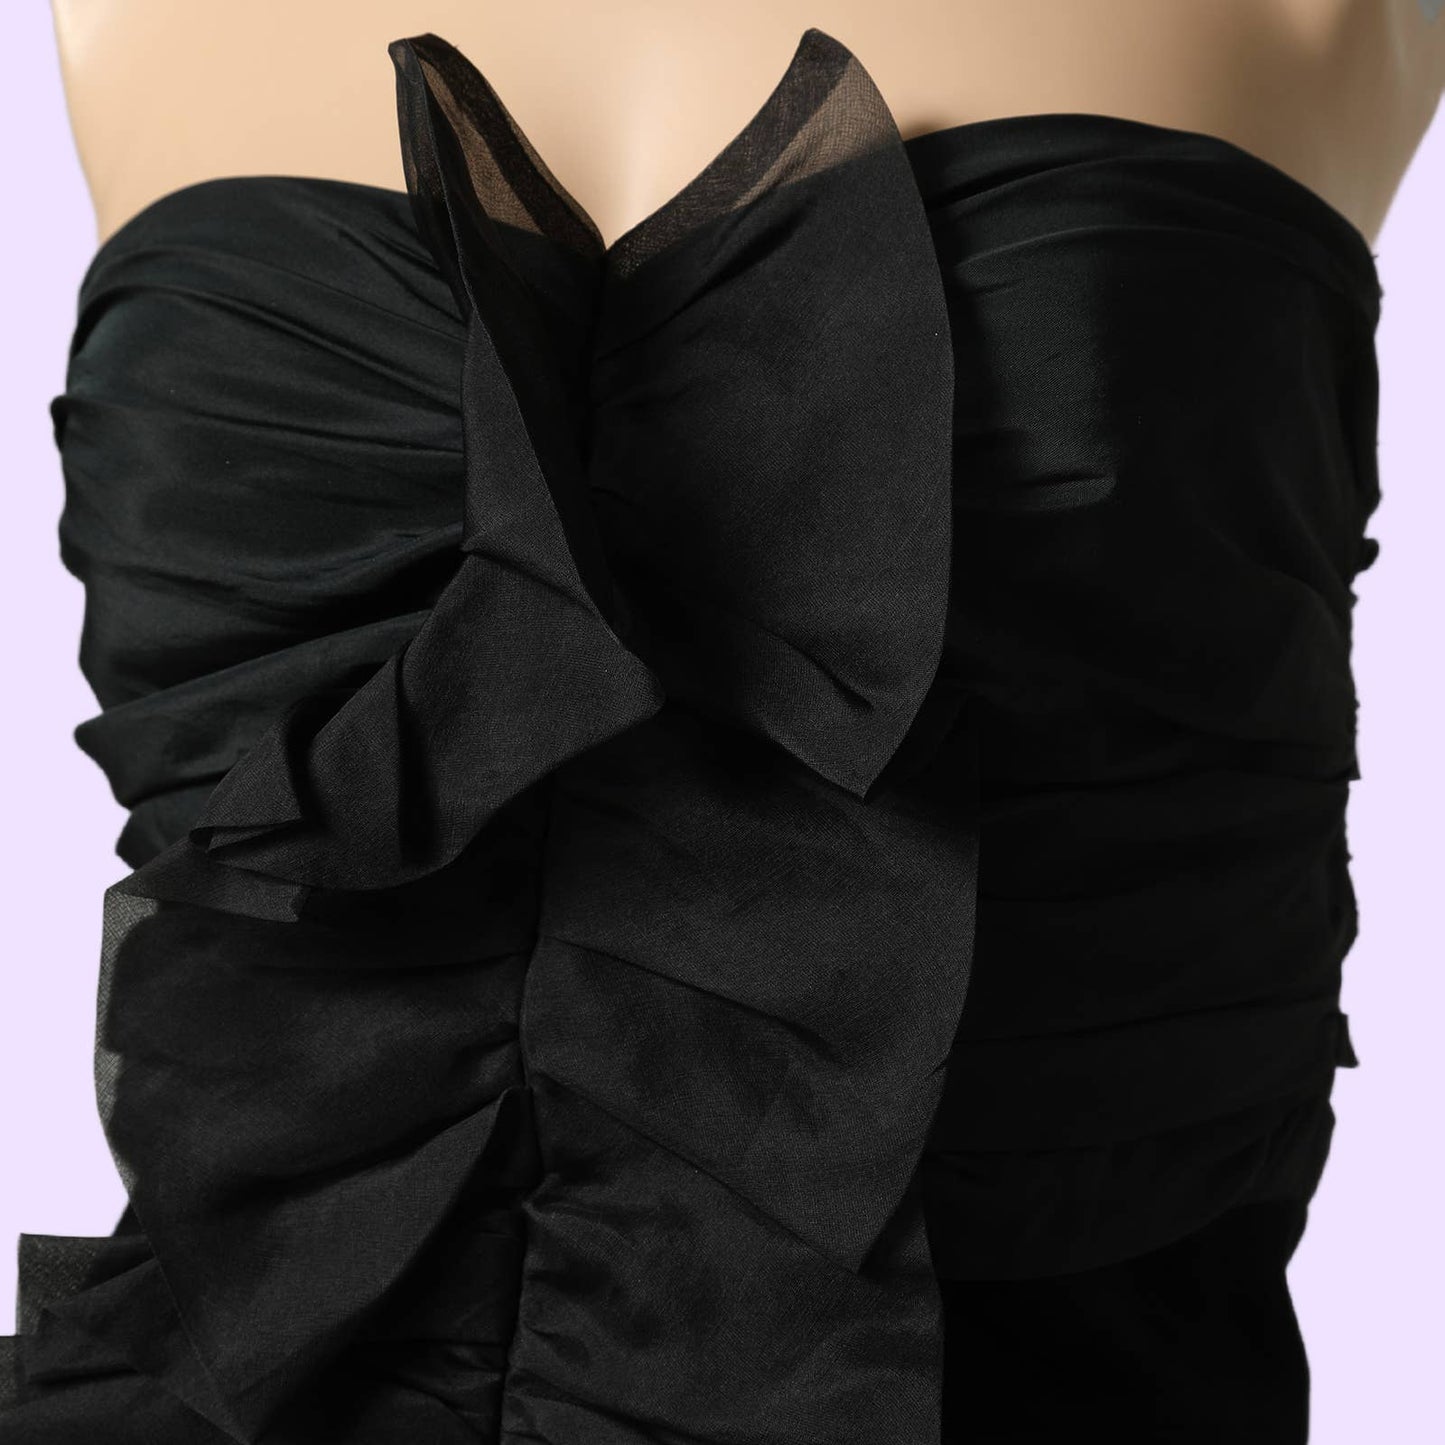 DOLCE & GABBANA Vintage Black Strapless Ruffled Dress